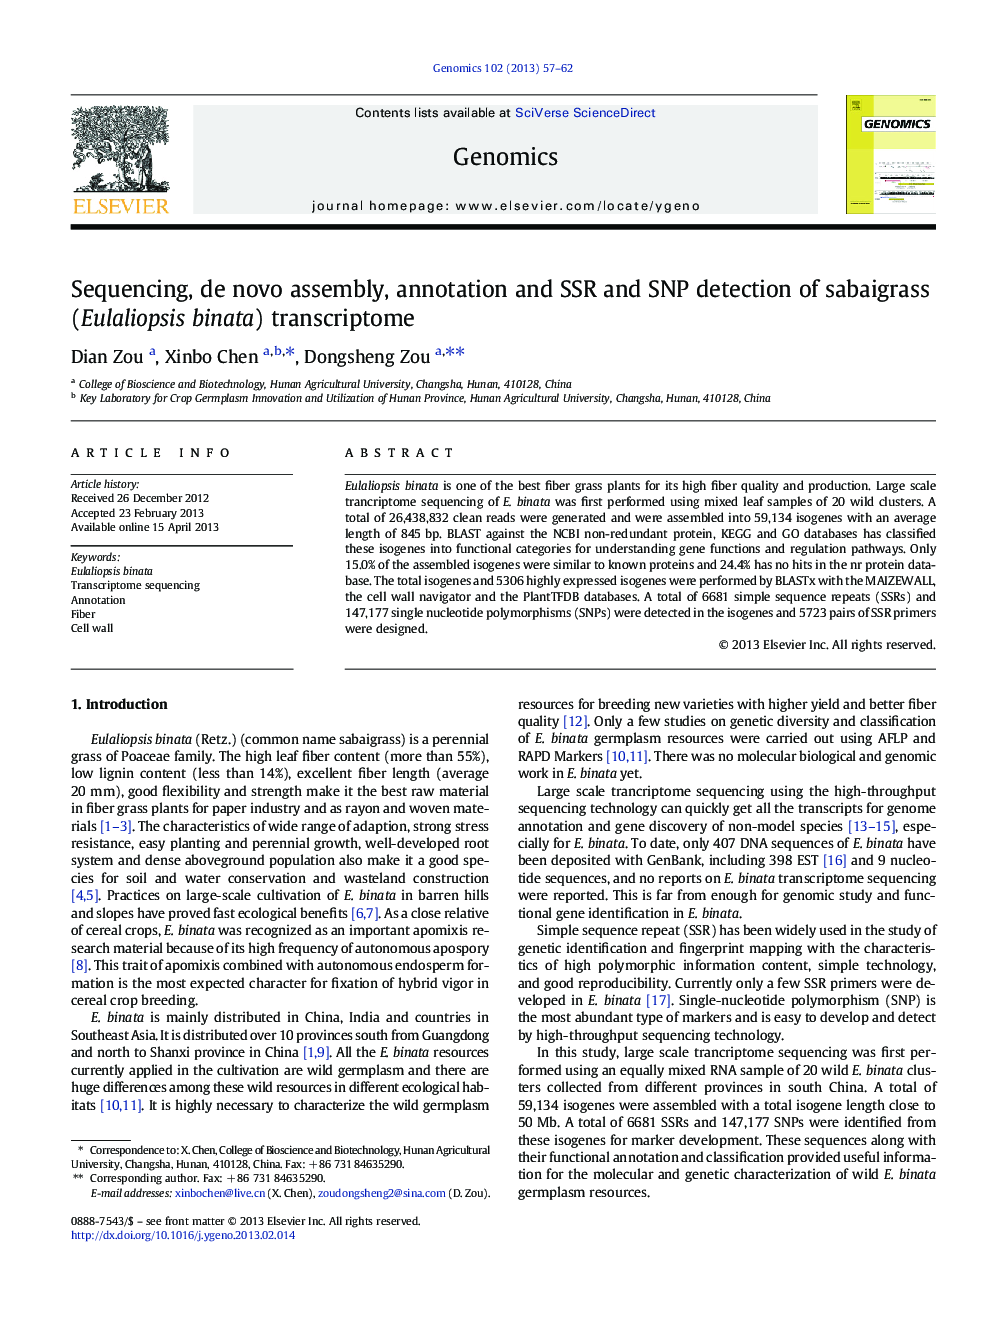 Sequencing, de novo assembly, annotation and SSR and SNP detection of sabaigrass (Eulaliopsis binata) transcriptome